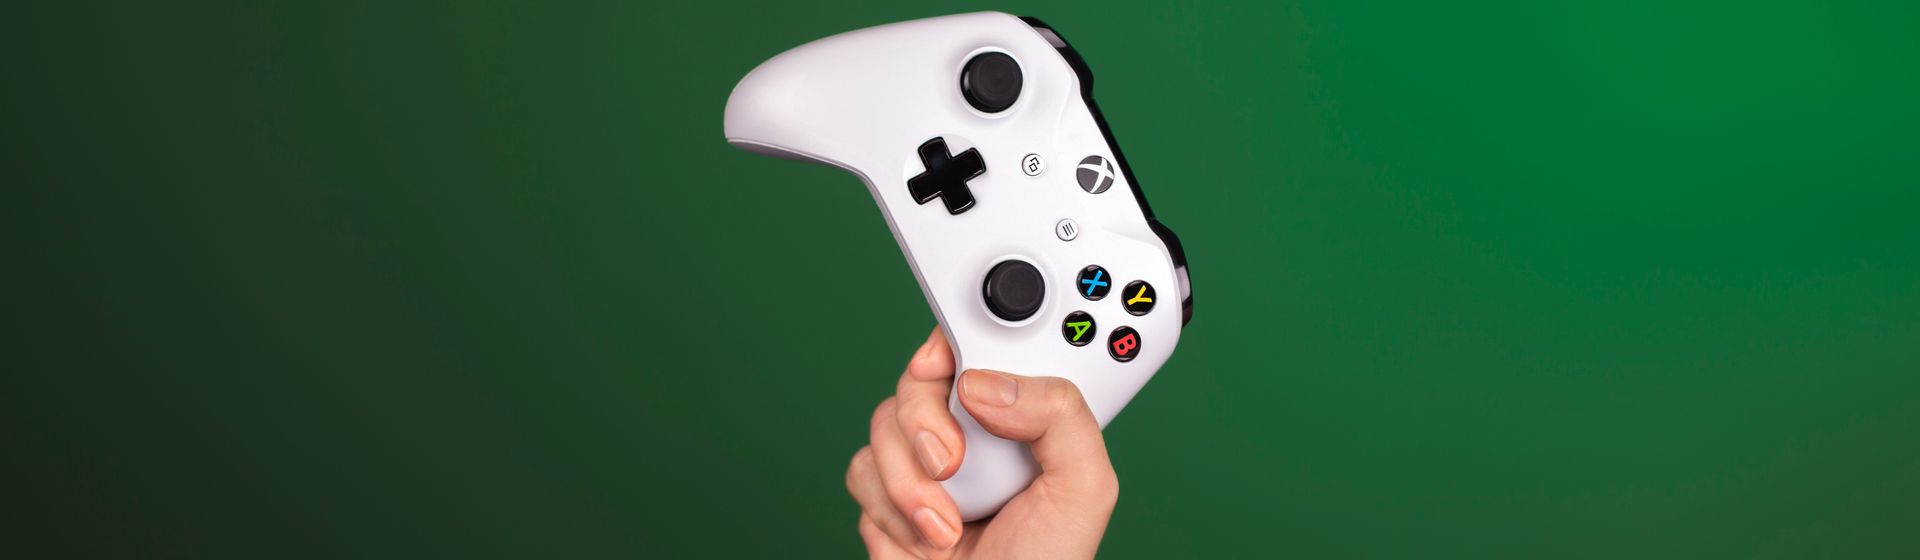 Capa do post: Xbox Live Gold: vale a pena assinar para conseguir jogos e descontos?